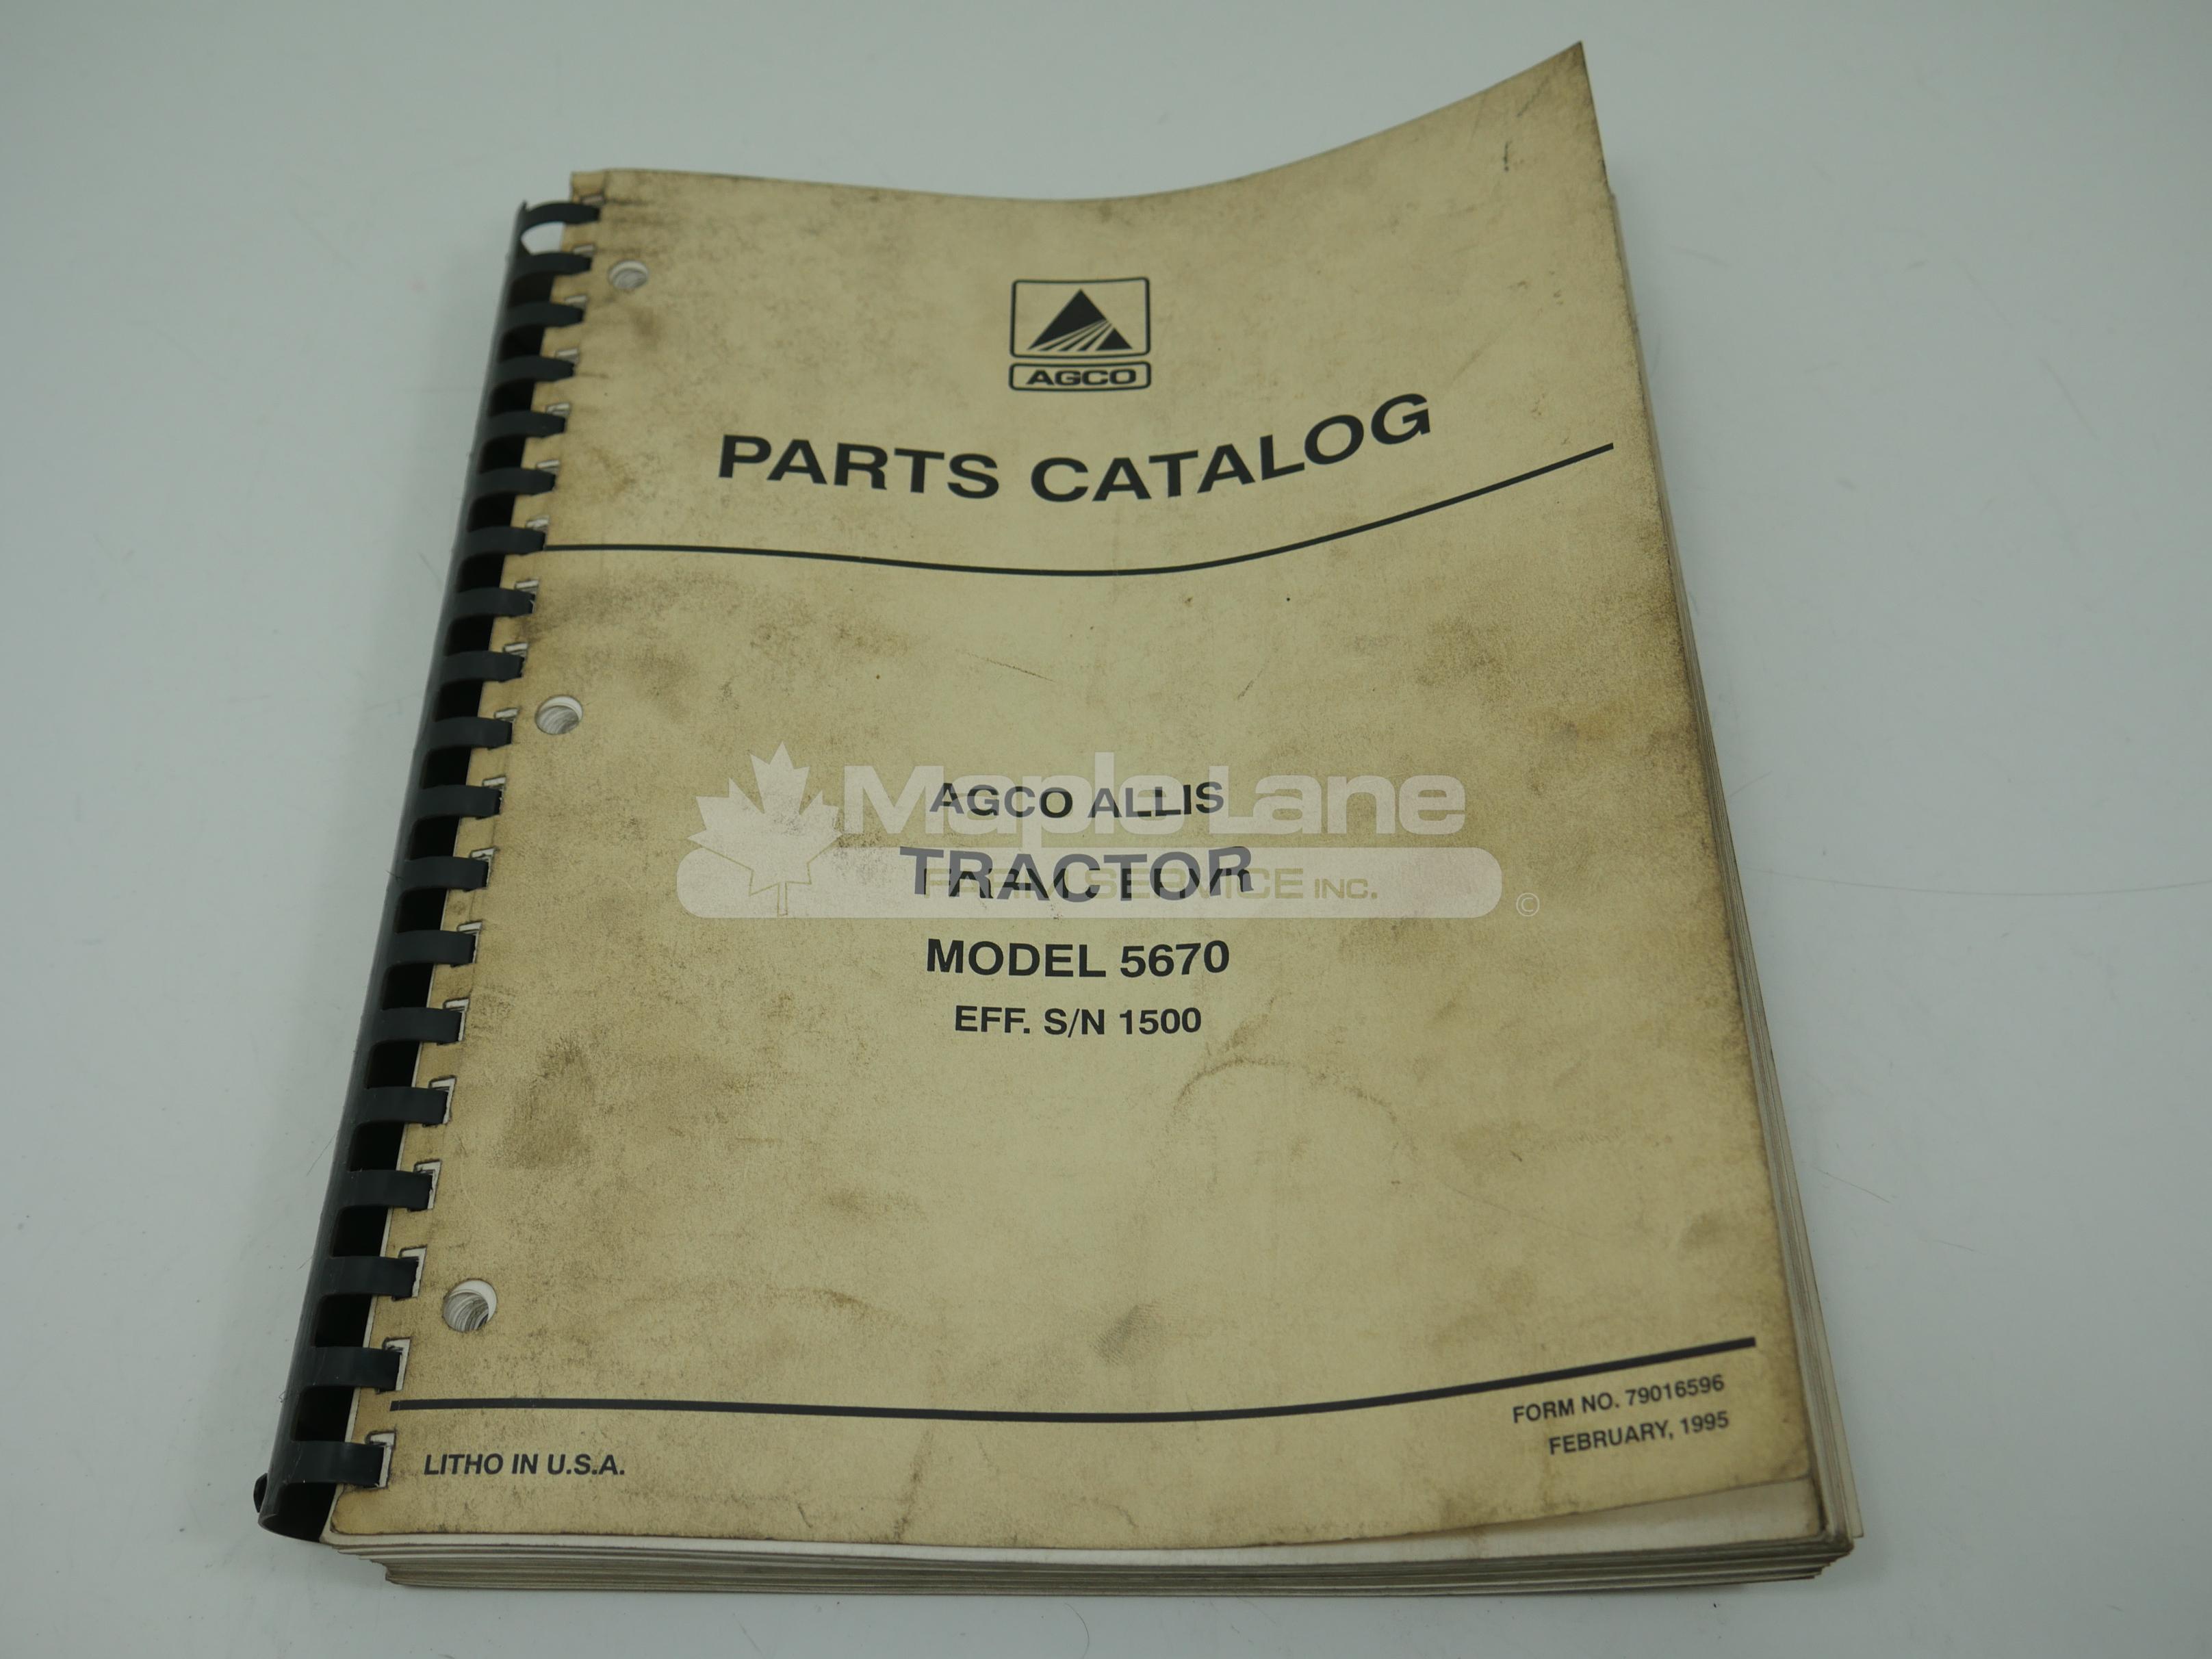 79016596 Parts Manual